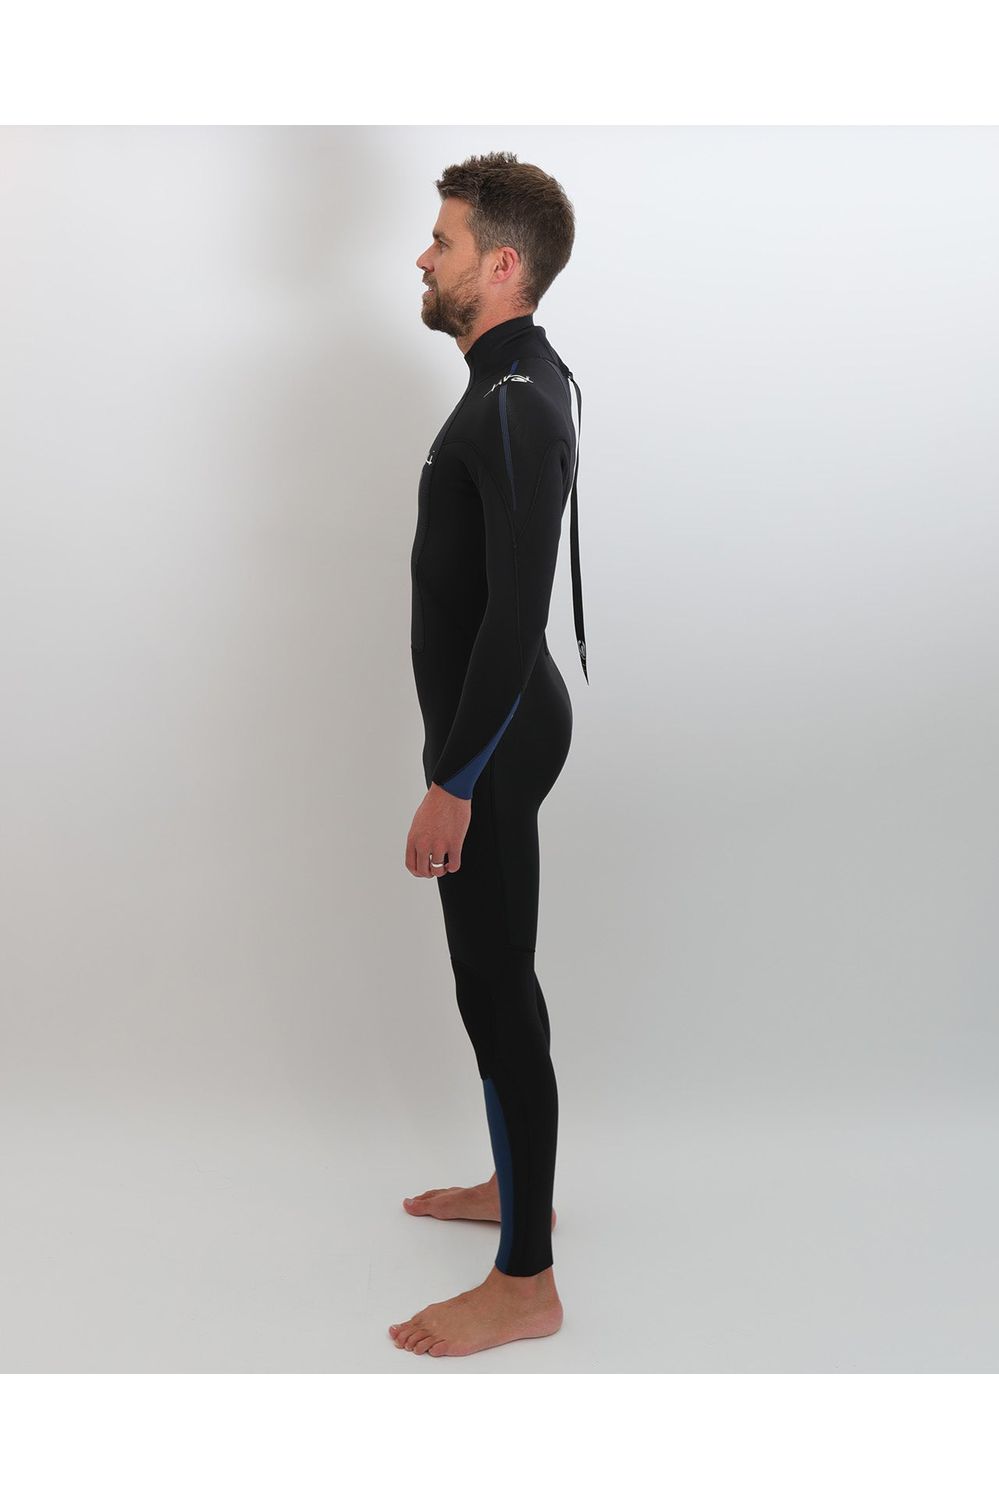 Tiki Mens Tech 5/4/3 GBS Wetsuit - Back Zip - Black/Blue